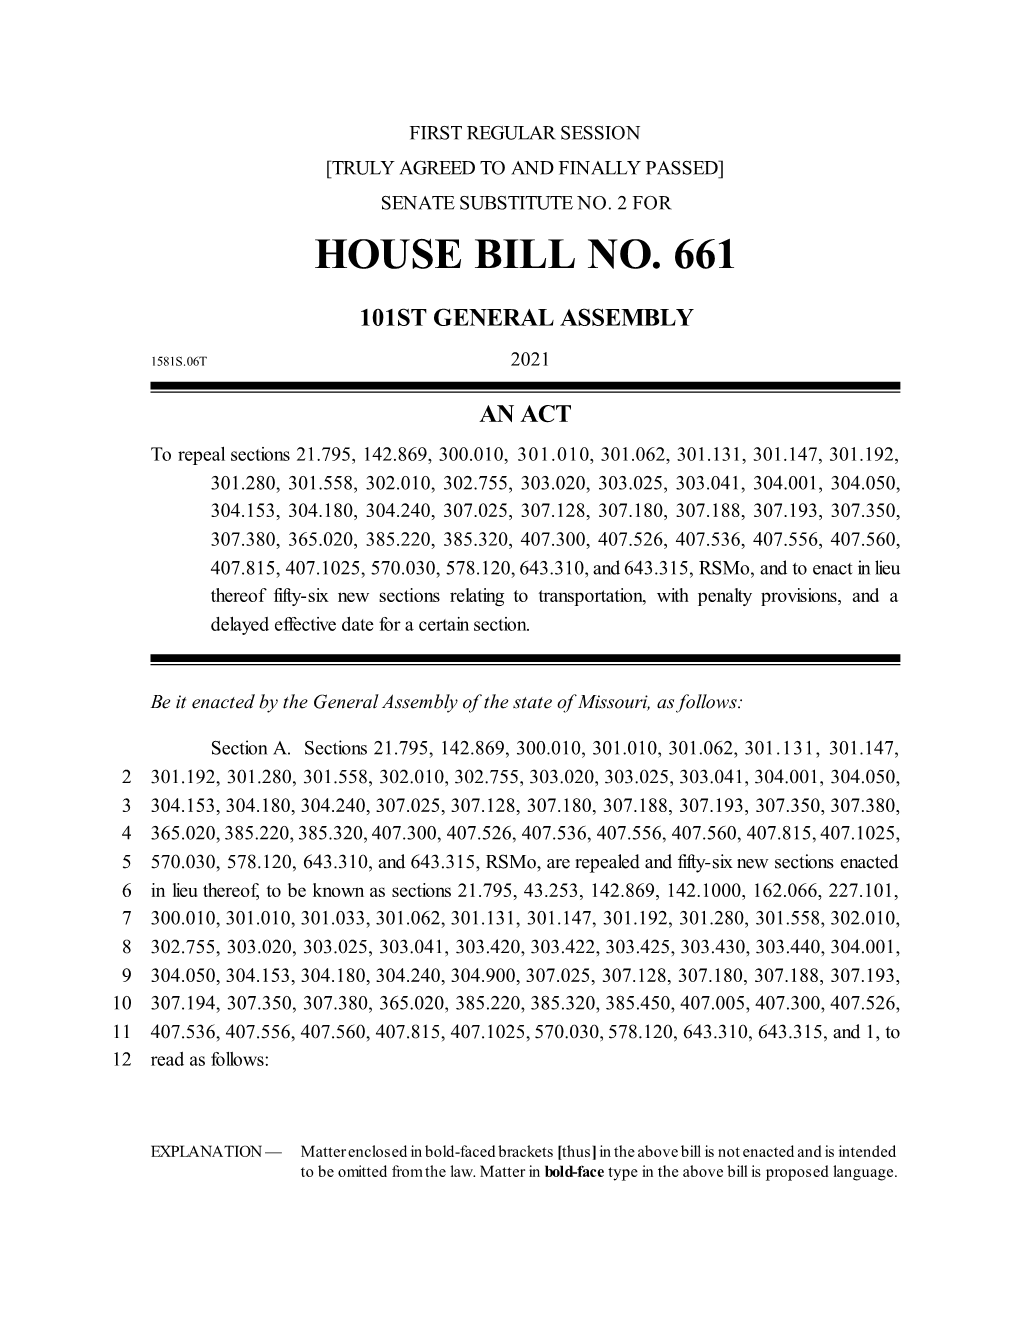 House Bill No. 661